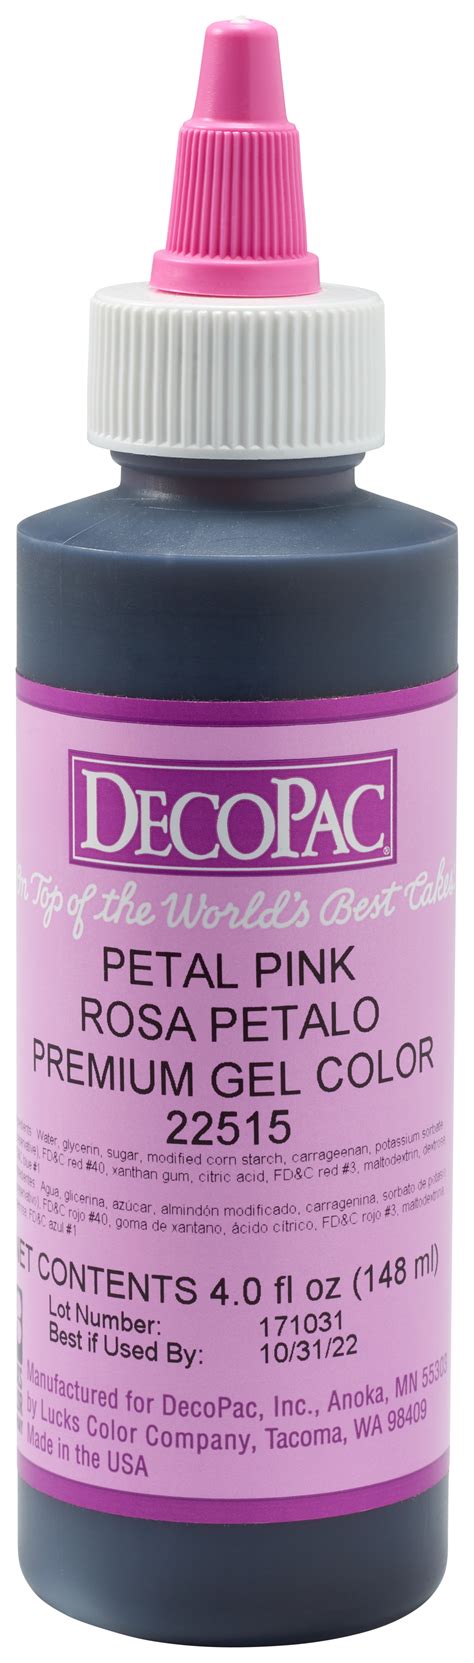 Petal Pink Trend Premium Gel Color Decopac